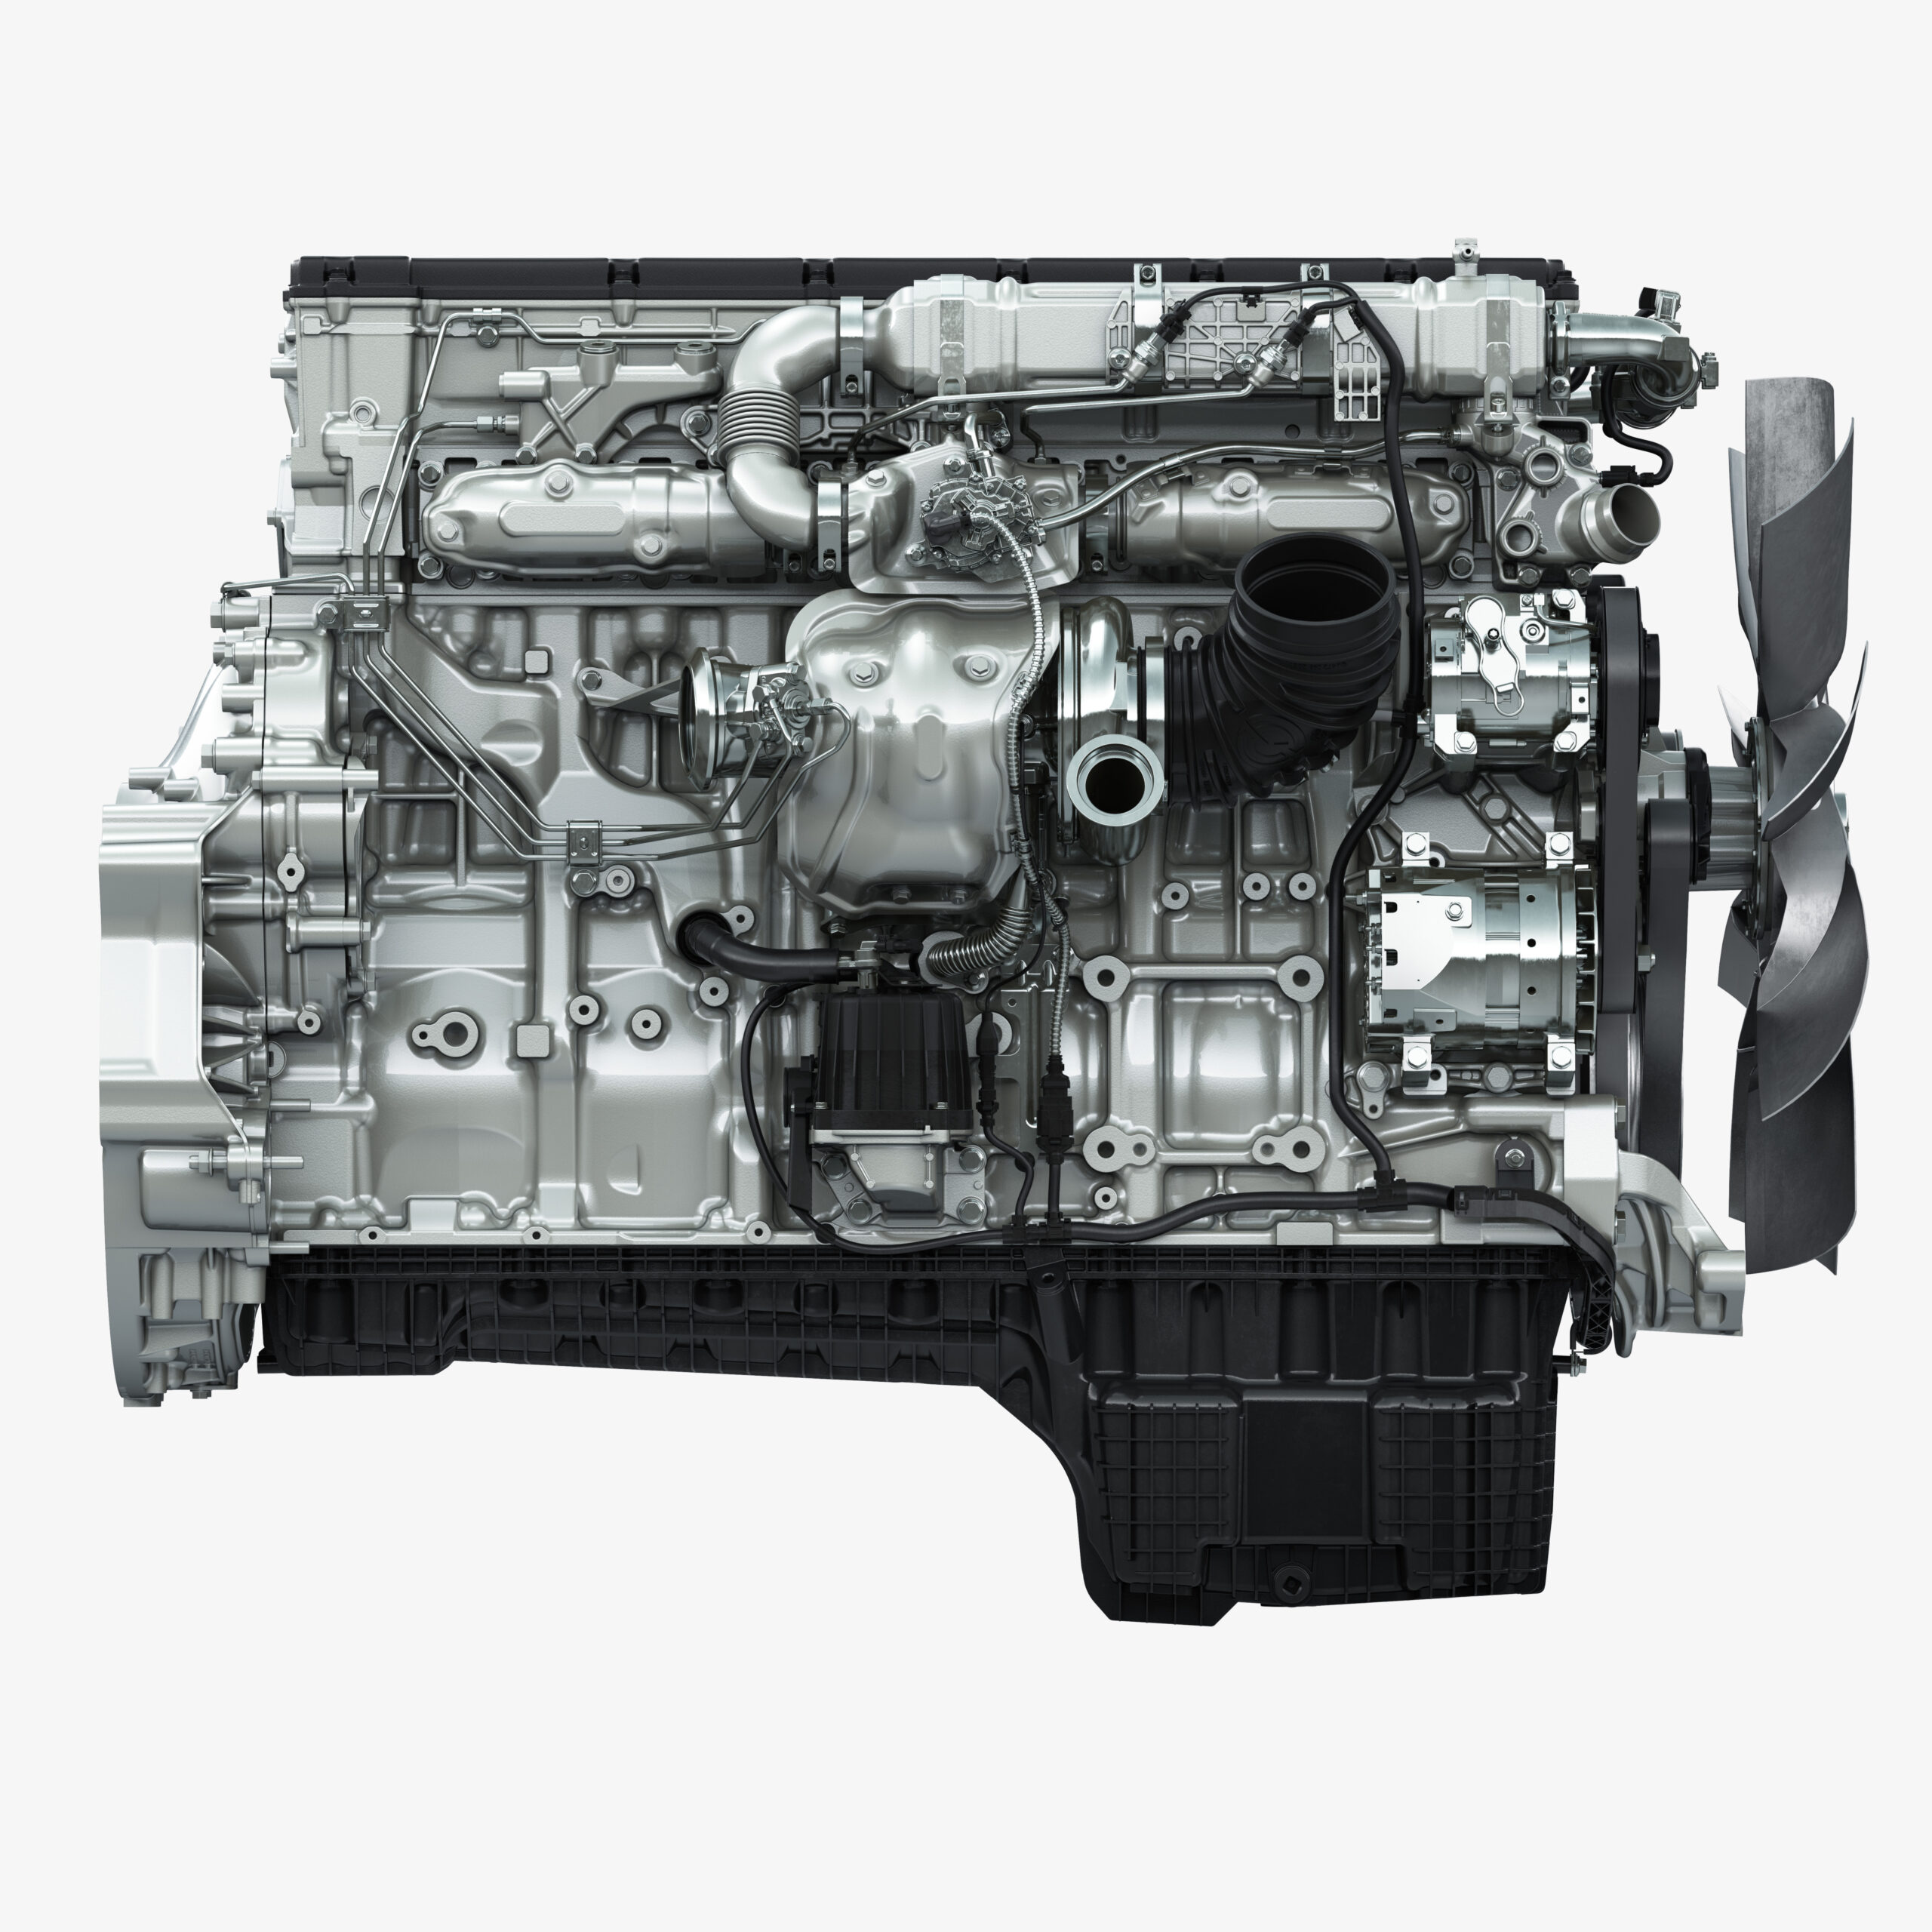 Dd15 Engine Parts Diagram 19